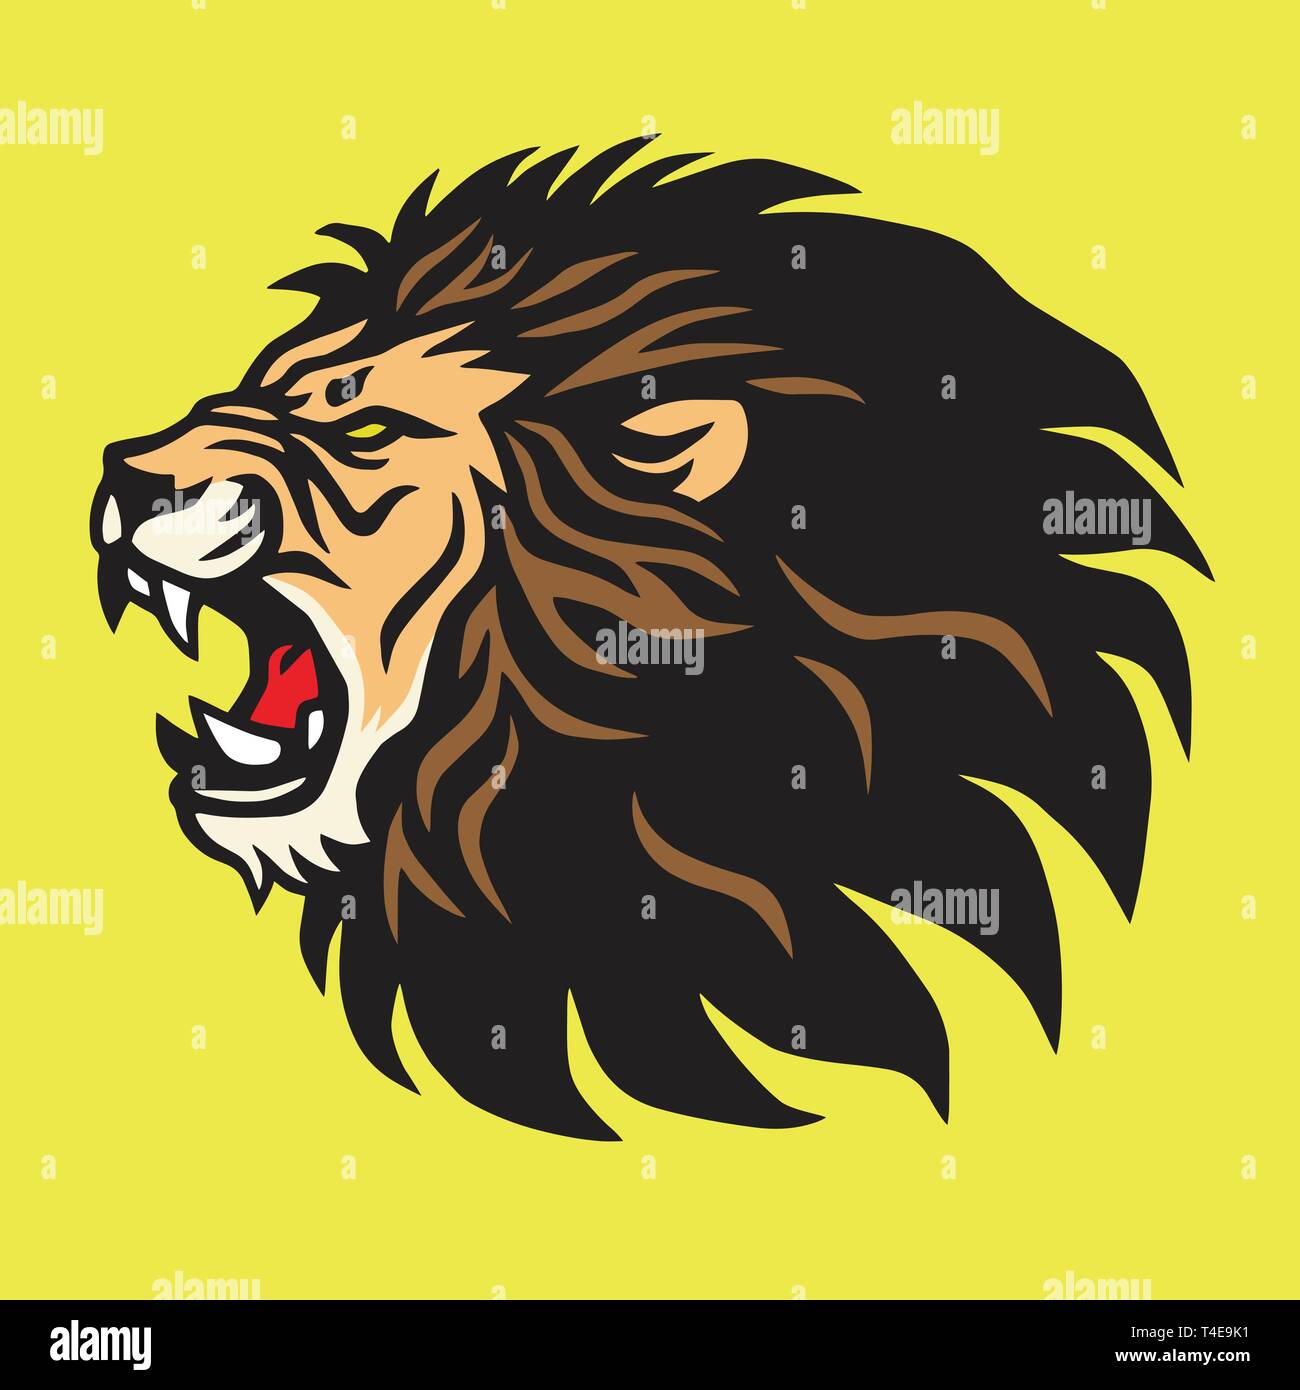 Roaring Lion Logo Mascot Vector Design Template Stock Vector Image ...